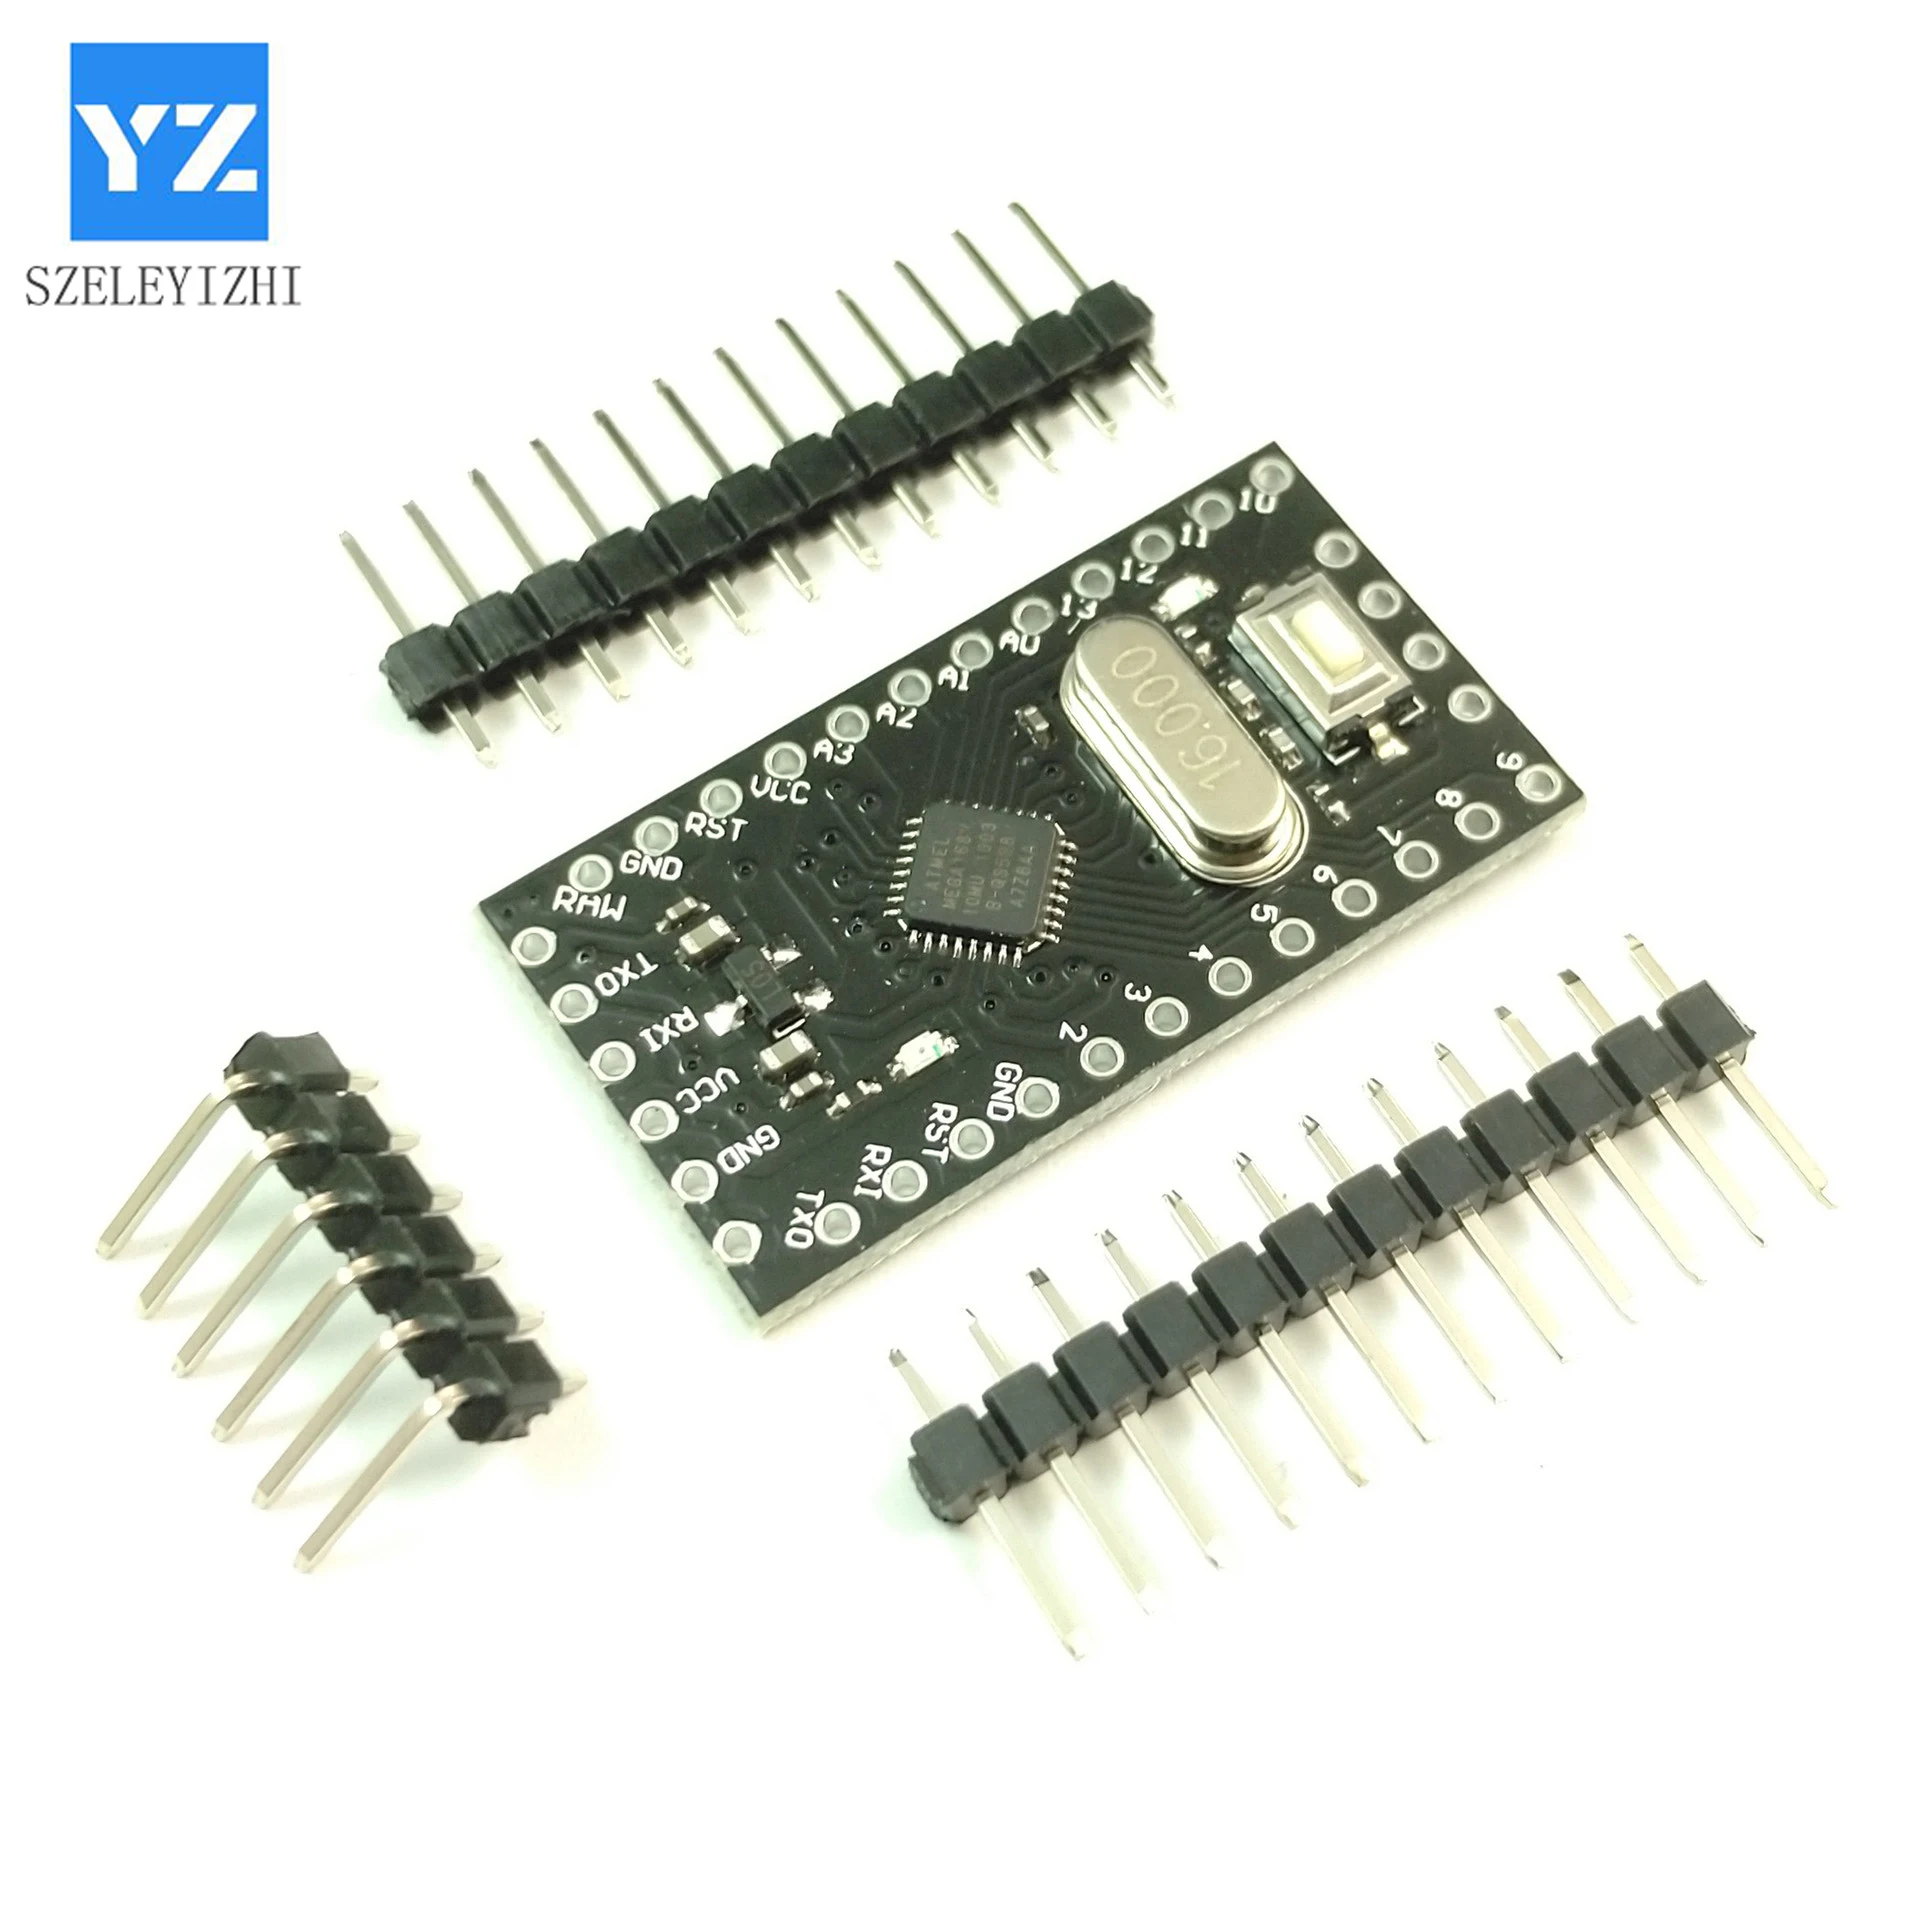 

SZELEYIZHI Pro Mini 168 Mini ATMEGA168 5V/16MHz For Arduino Compatible With Nano Microcontrol Micro Control Board